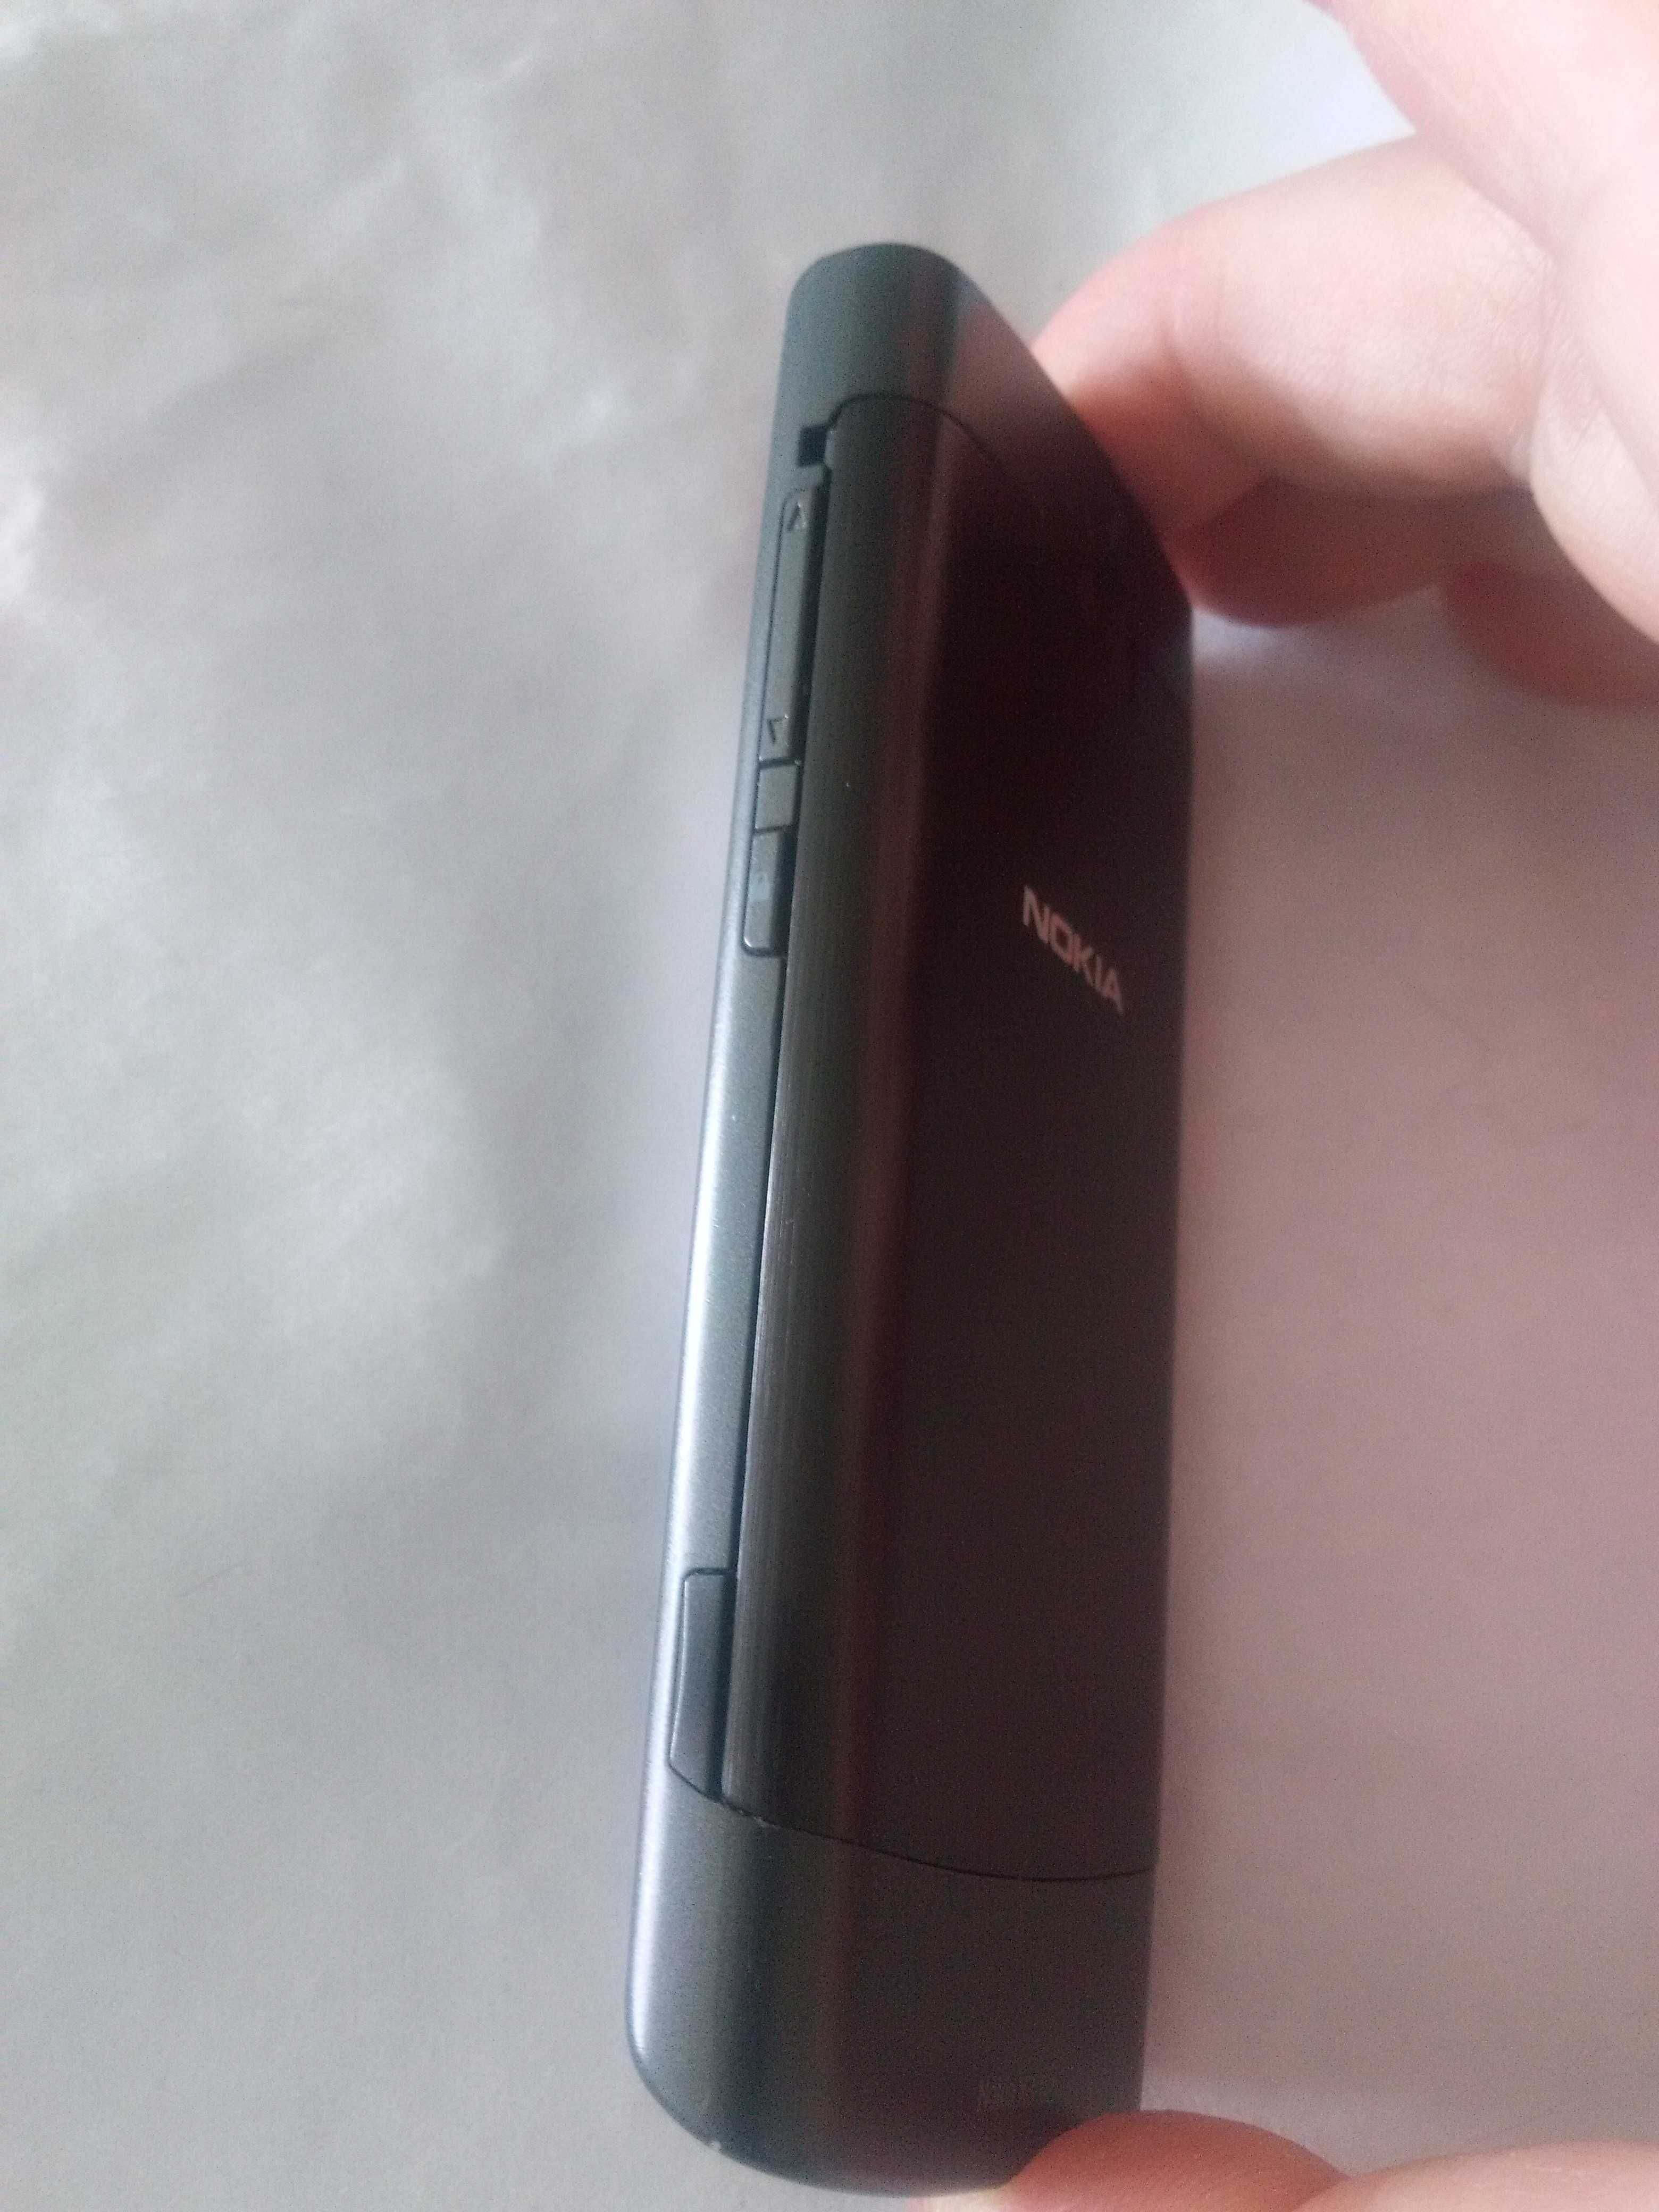 GSM Nokia X3-02, черен